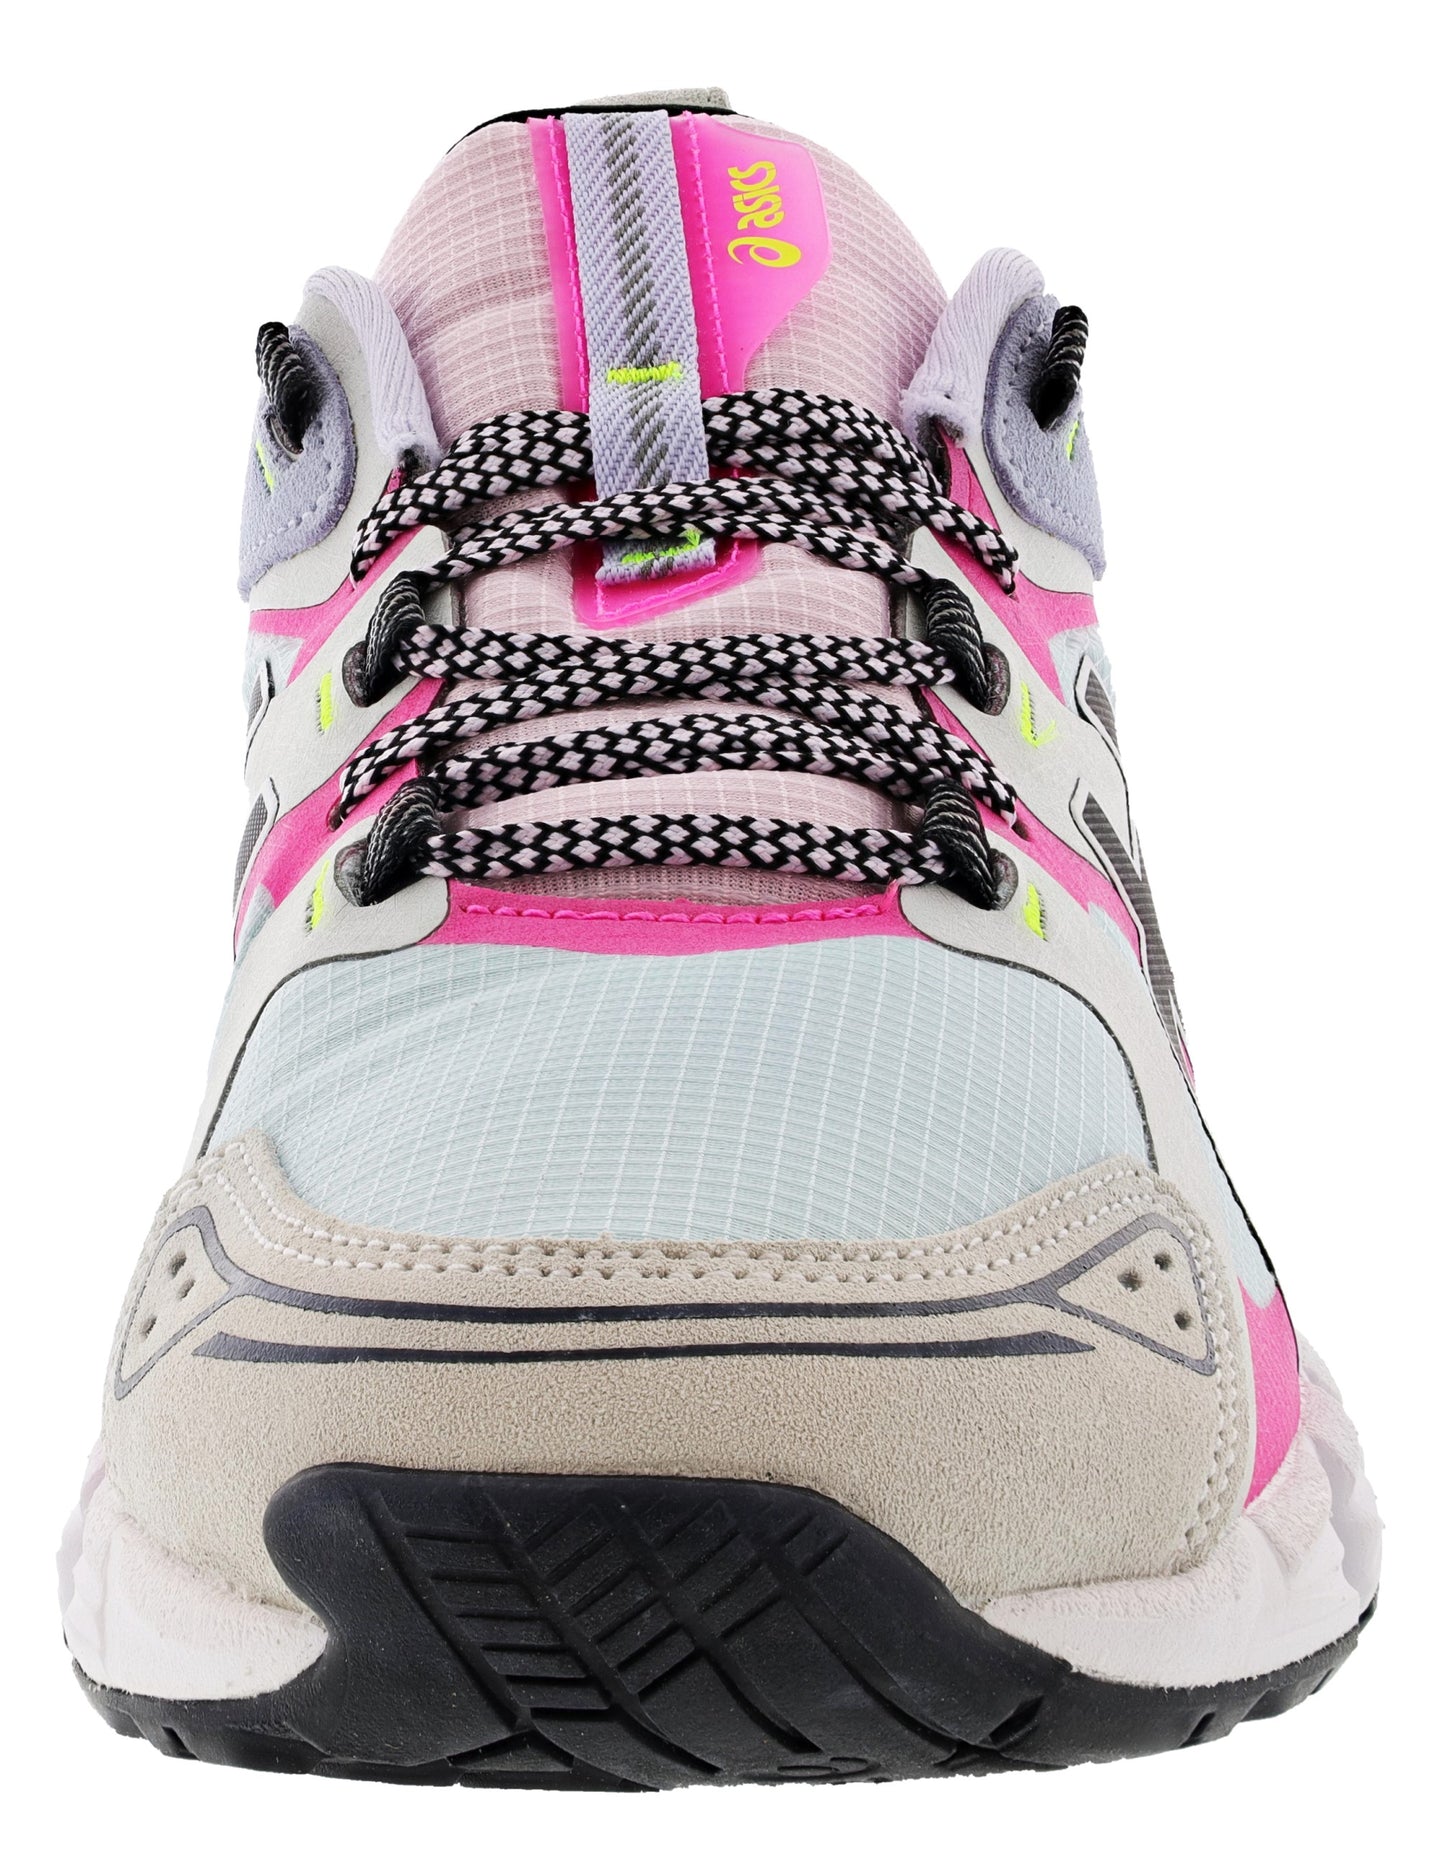 
                  
                    Front of Aqua Angel/Hot Pink Asics Gel Quantum 180 Women's Running Shoes for Overpronation
                  
                